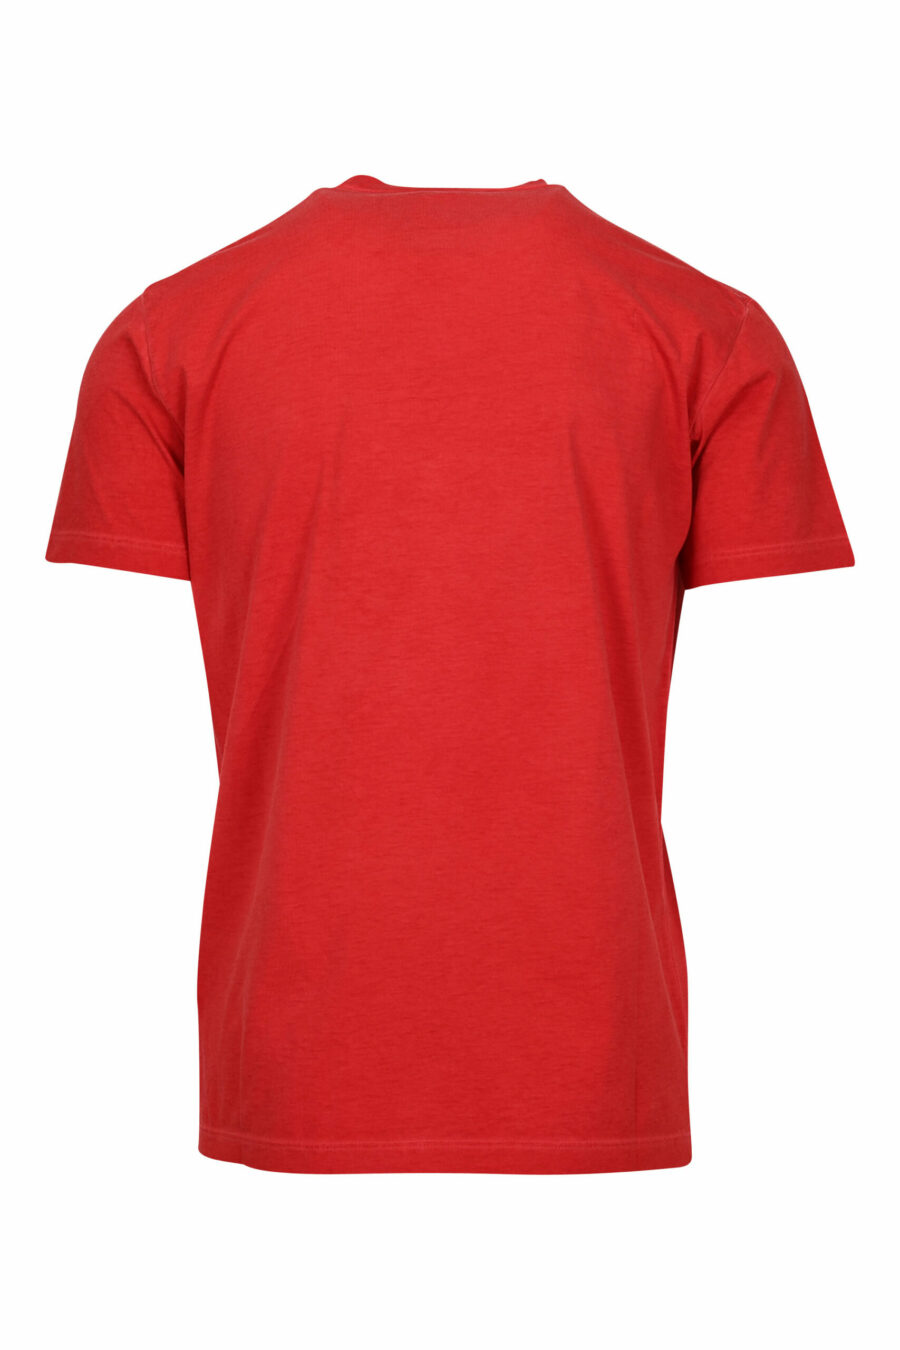 Camiseta roja con maxilogo "vip" - 8054148578923 1 scaled